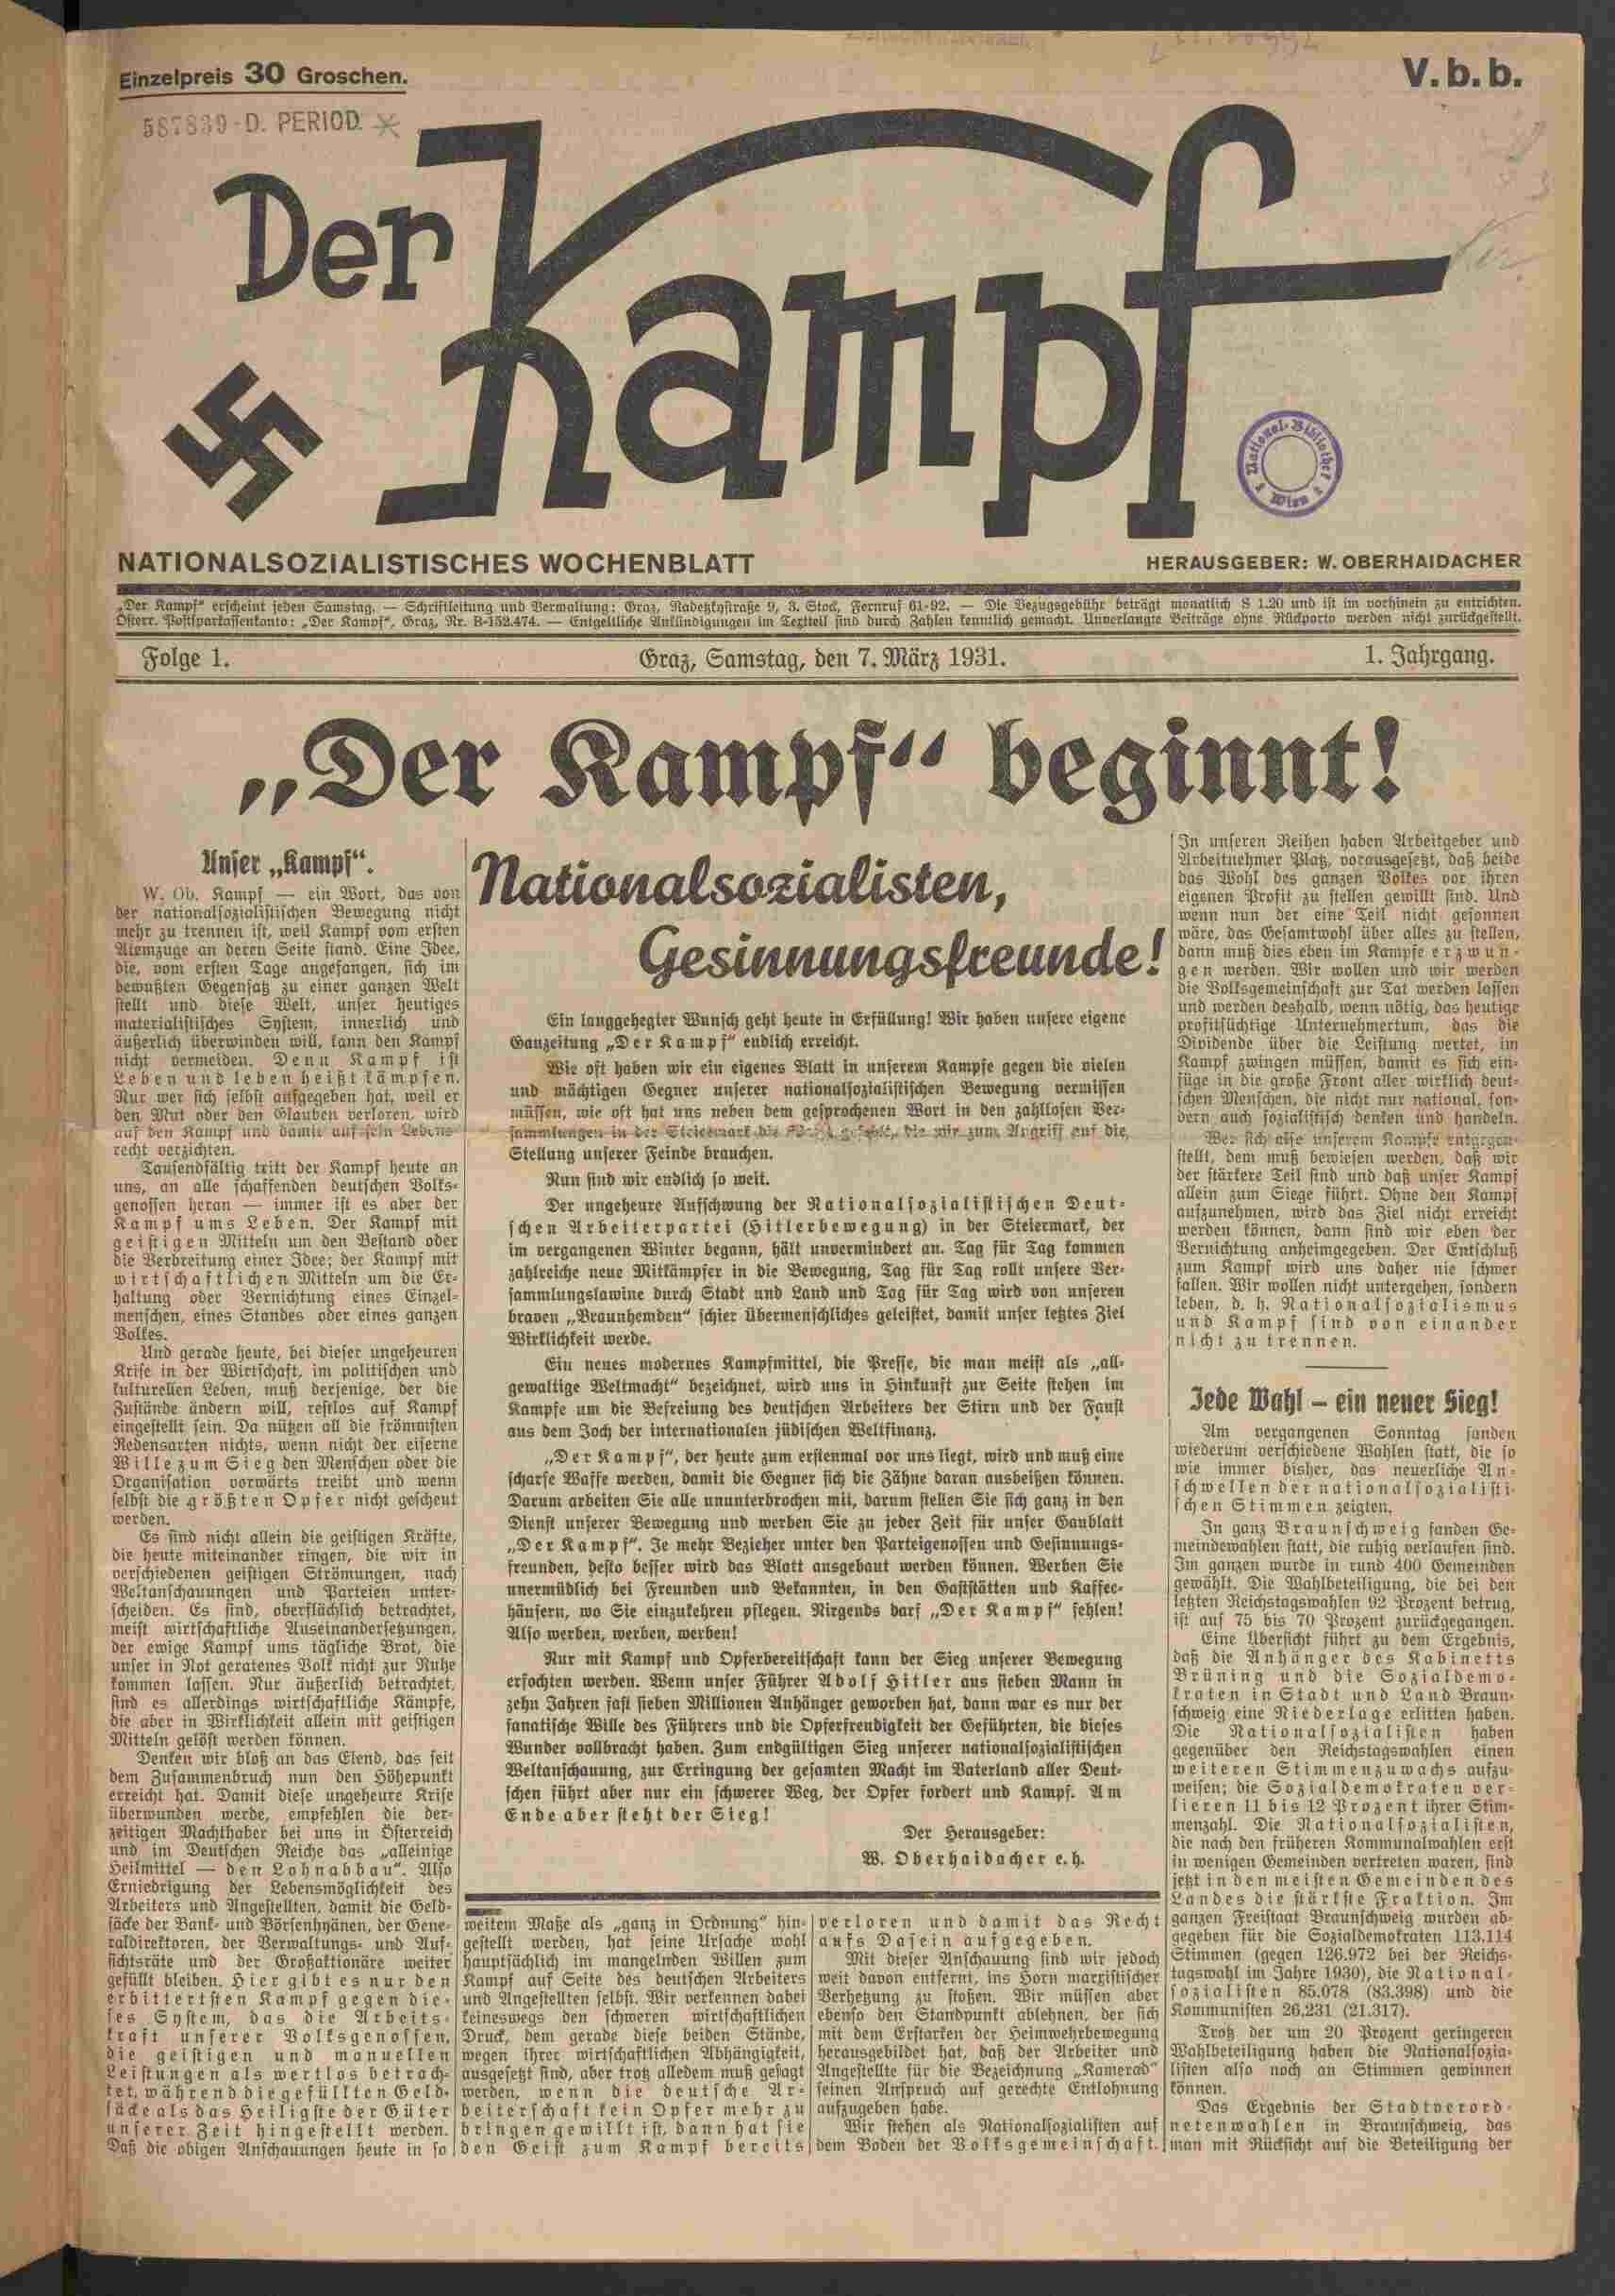 Der Kampf, 7.3.1931, S.1, ANNO/ÖNB